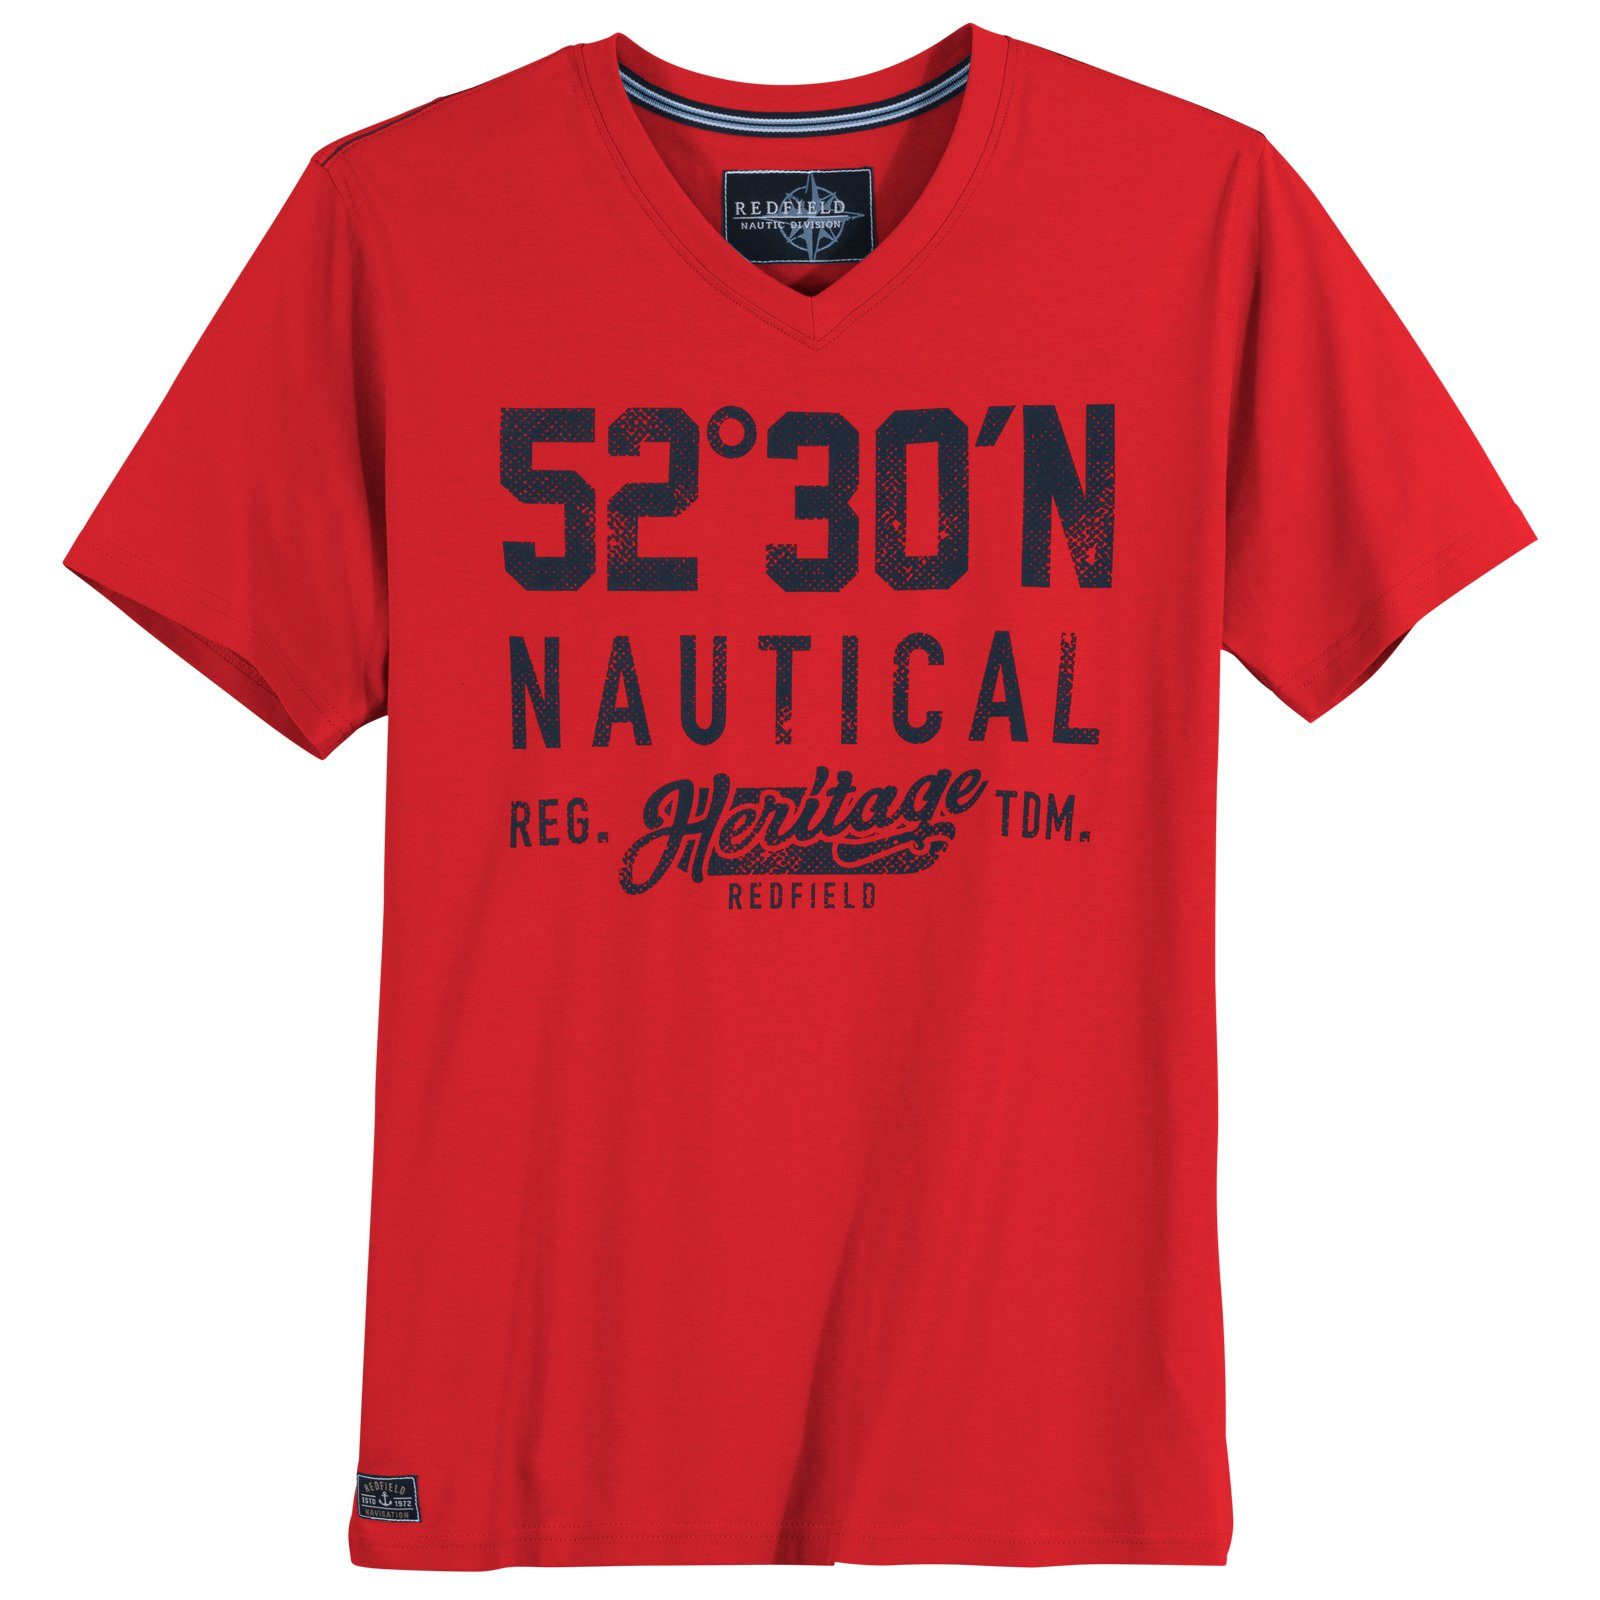 rot Redfield Große Herren 52°30'N redfield Print-Shirt Größen V-Neck T-Shirt